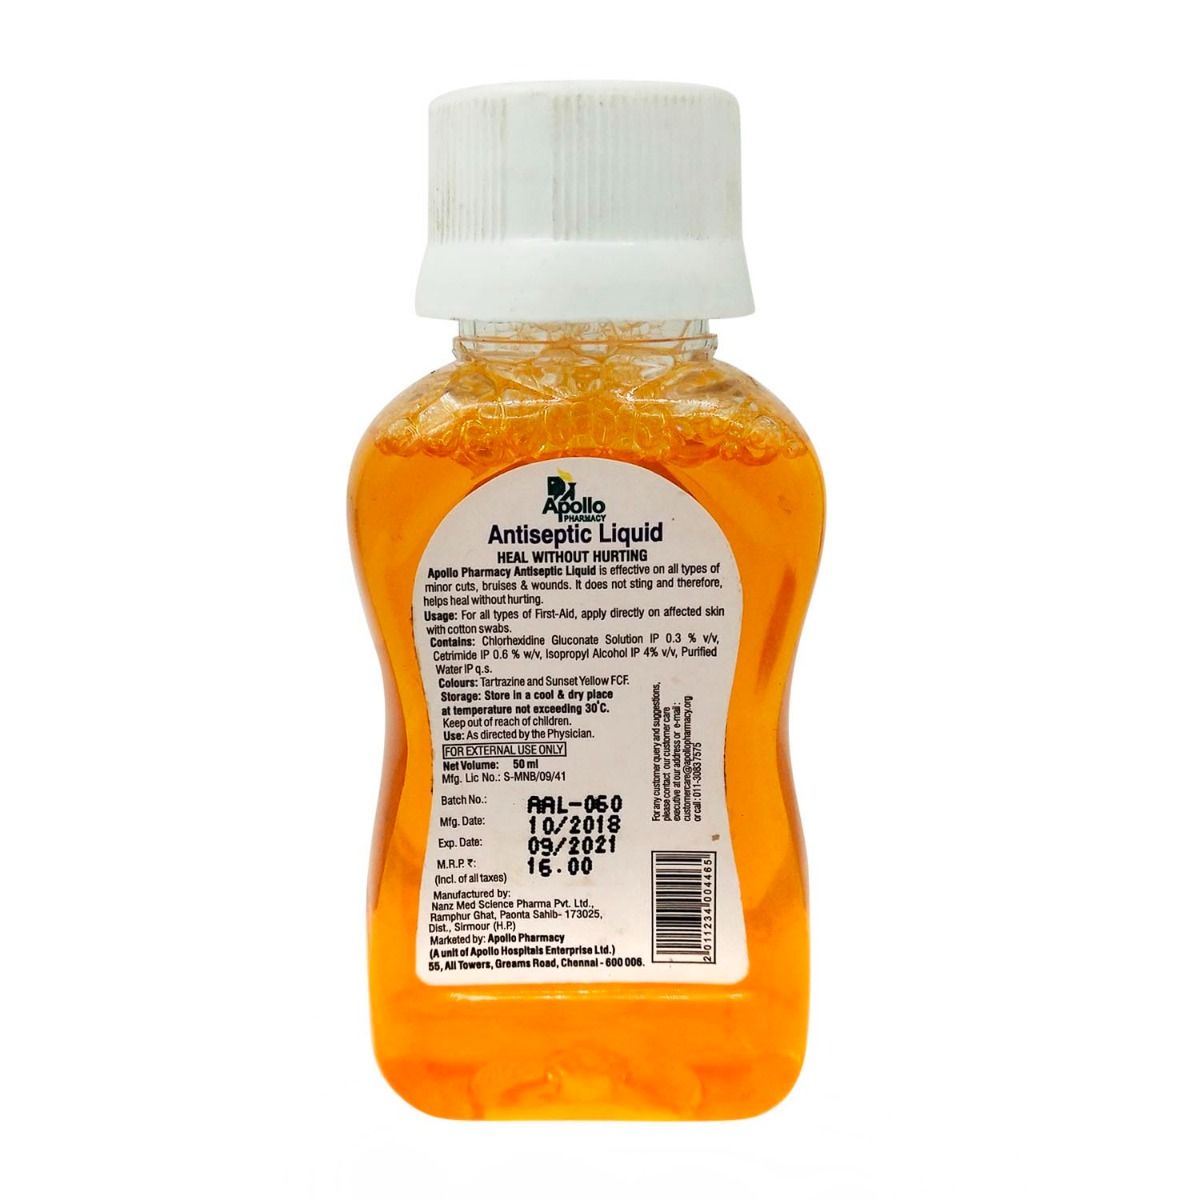 Apollo Pharmacy Antiseptic Liquid, 50 ml, Pack of 1 